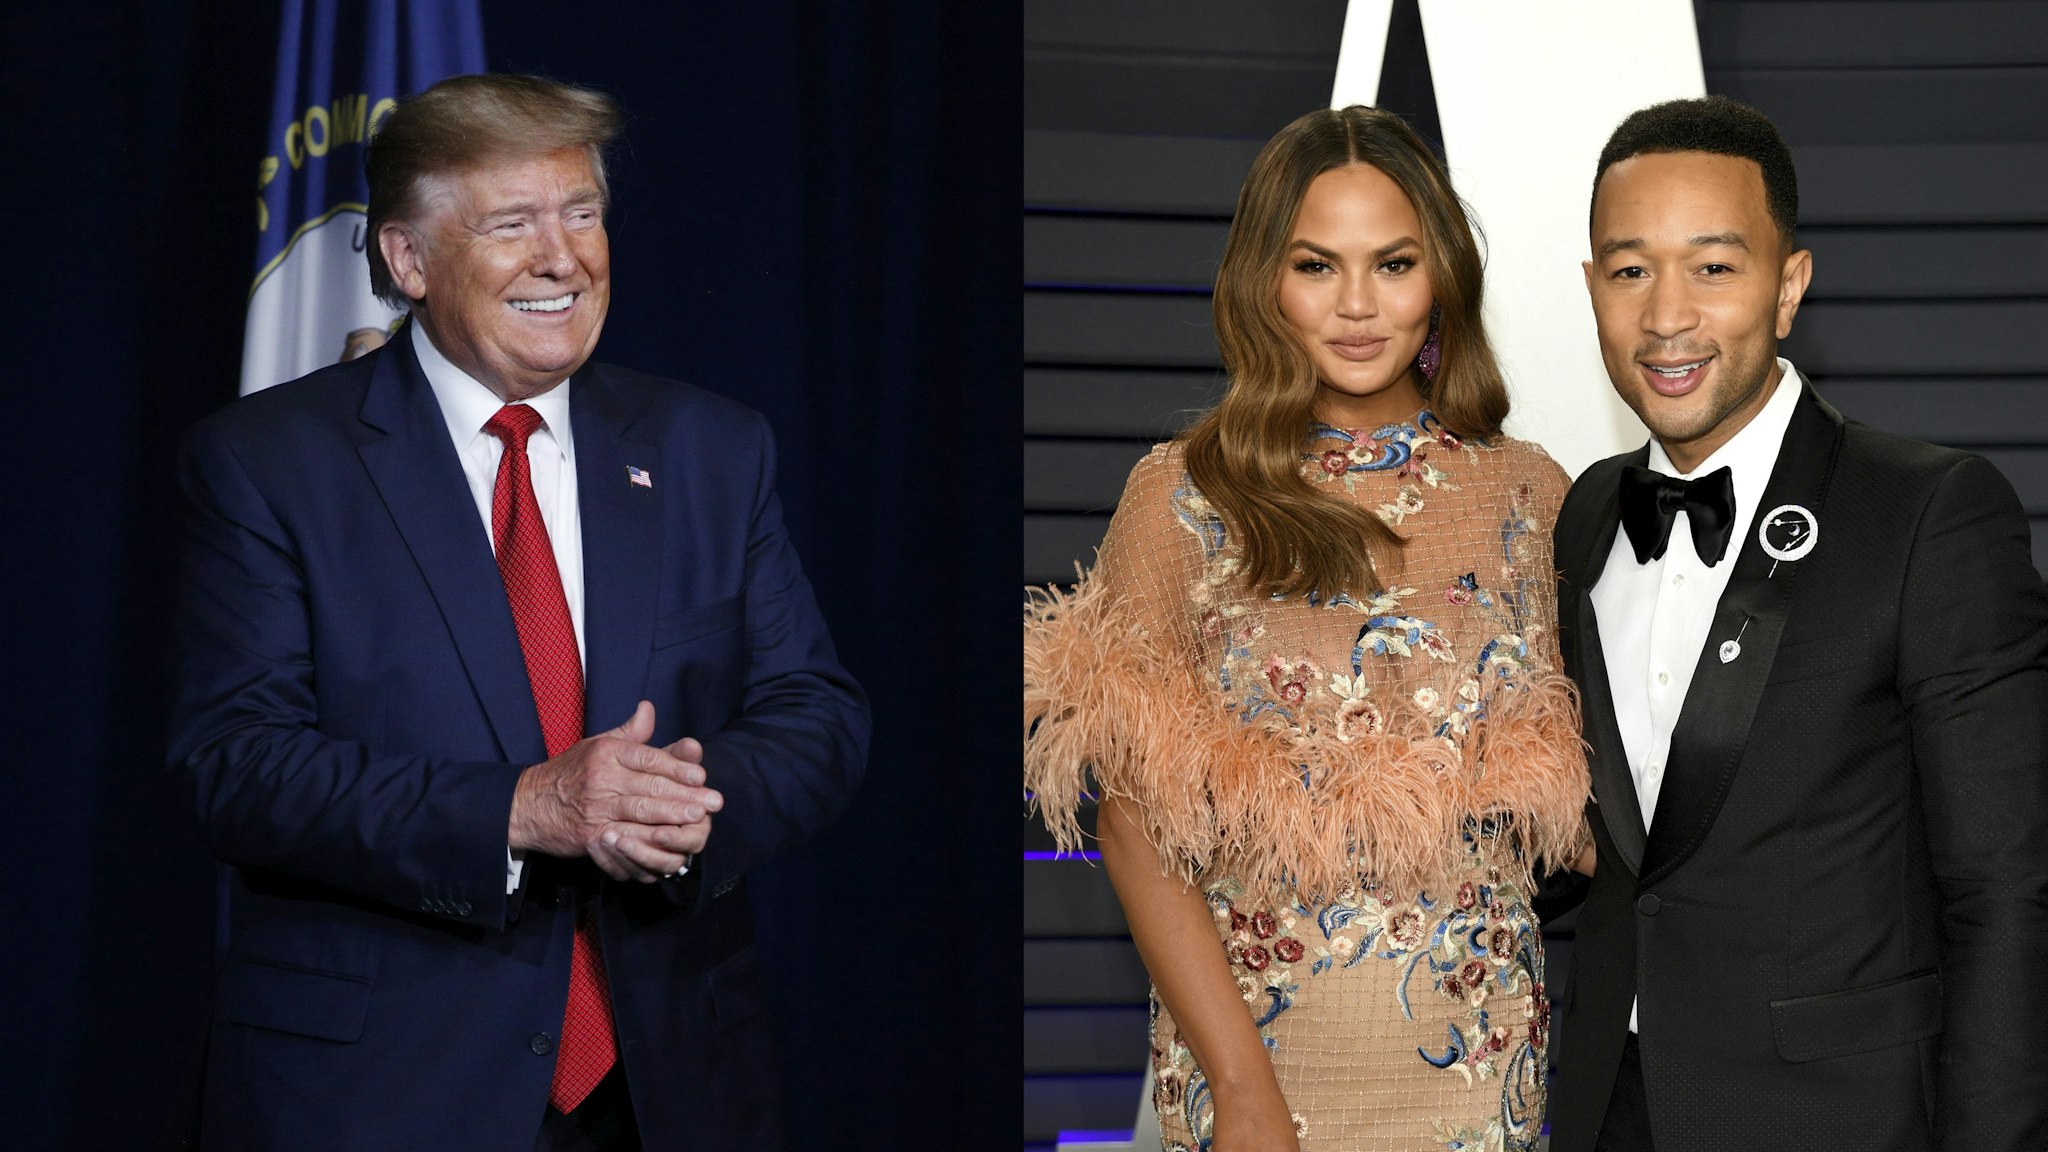 President Trump, John Legend, and Chrissy Teigen